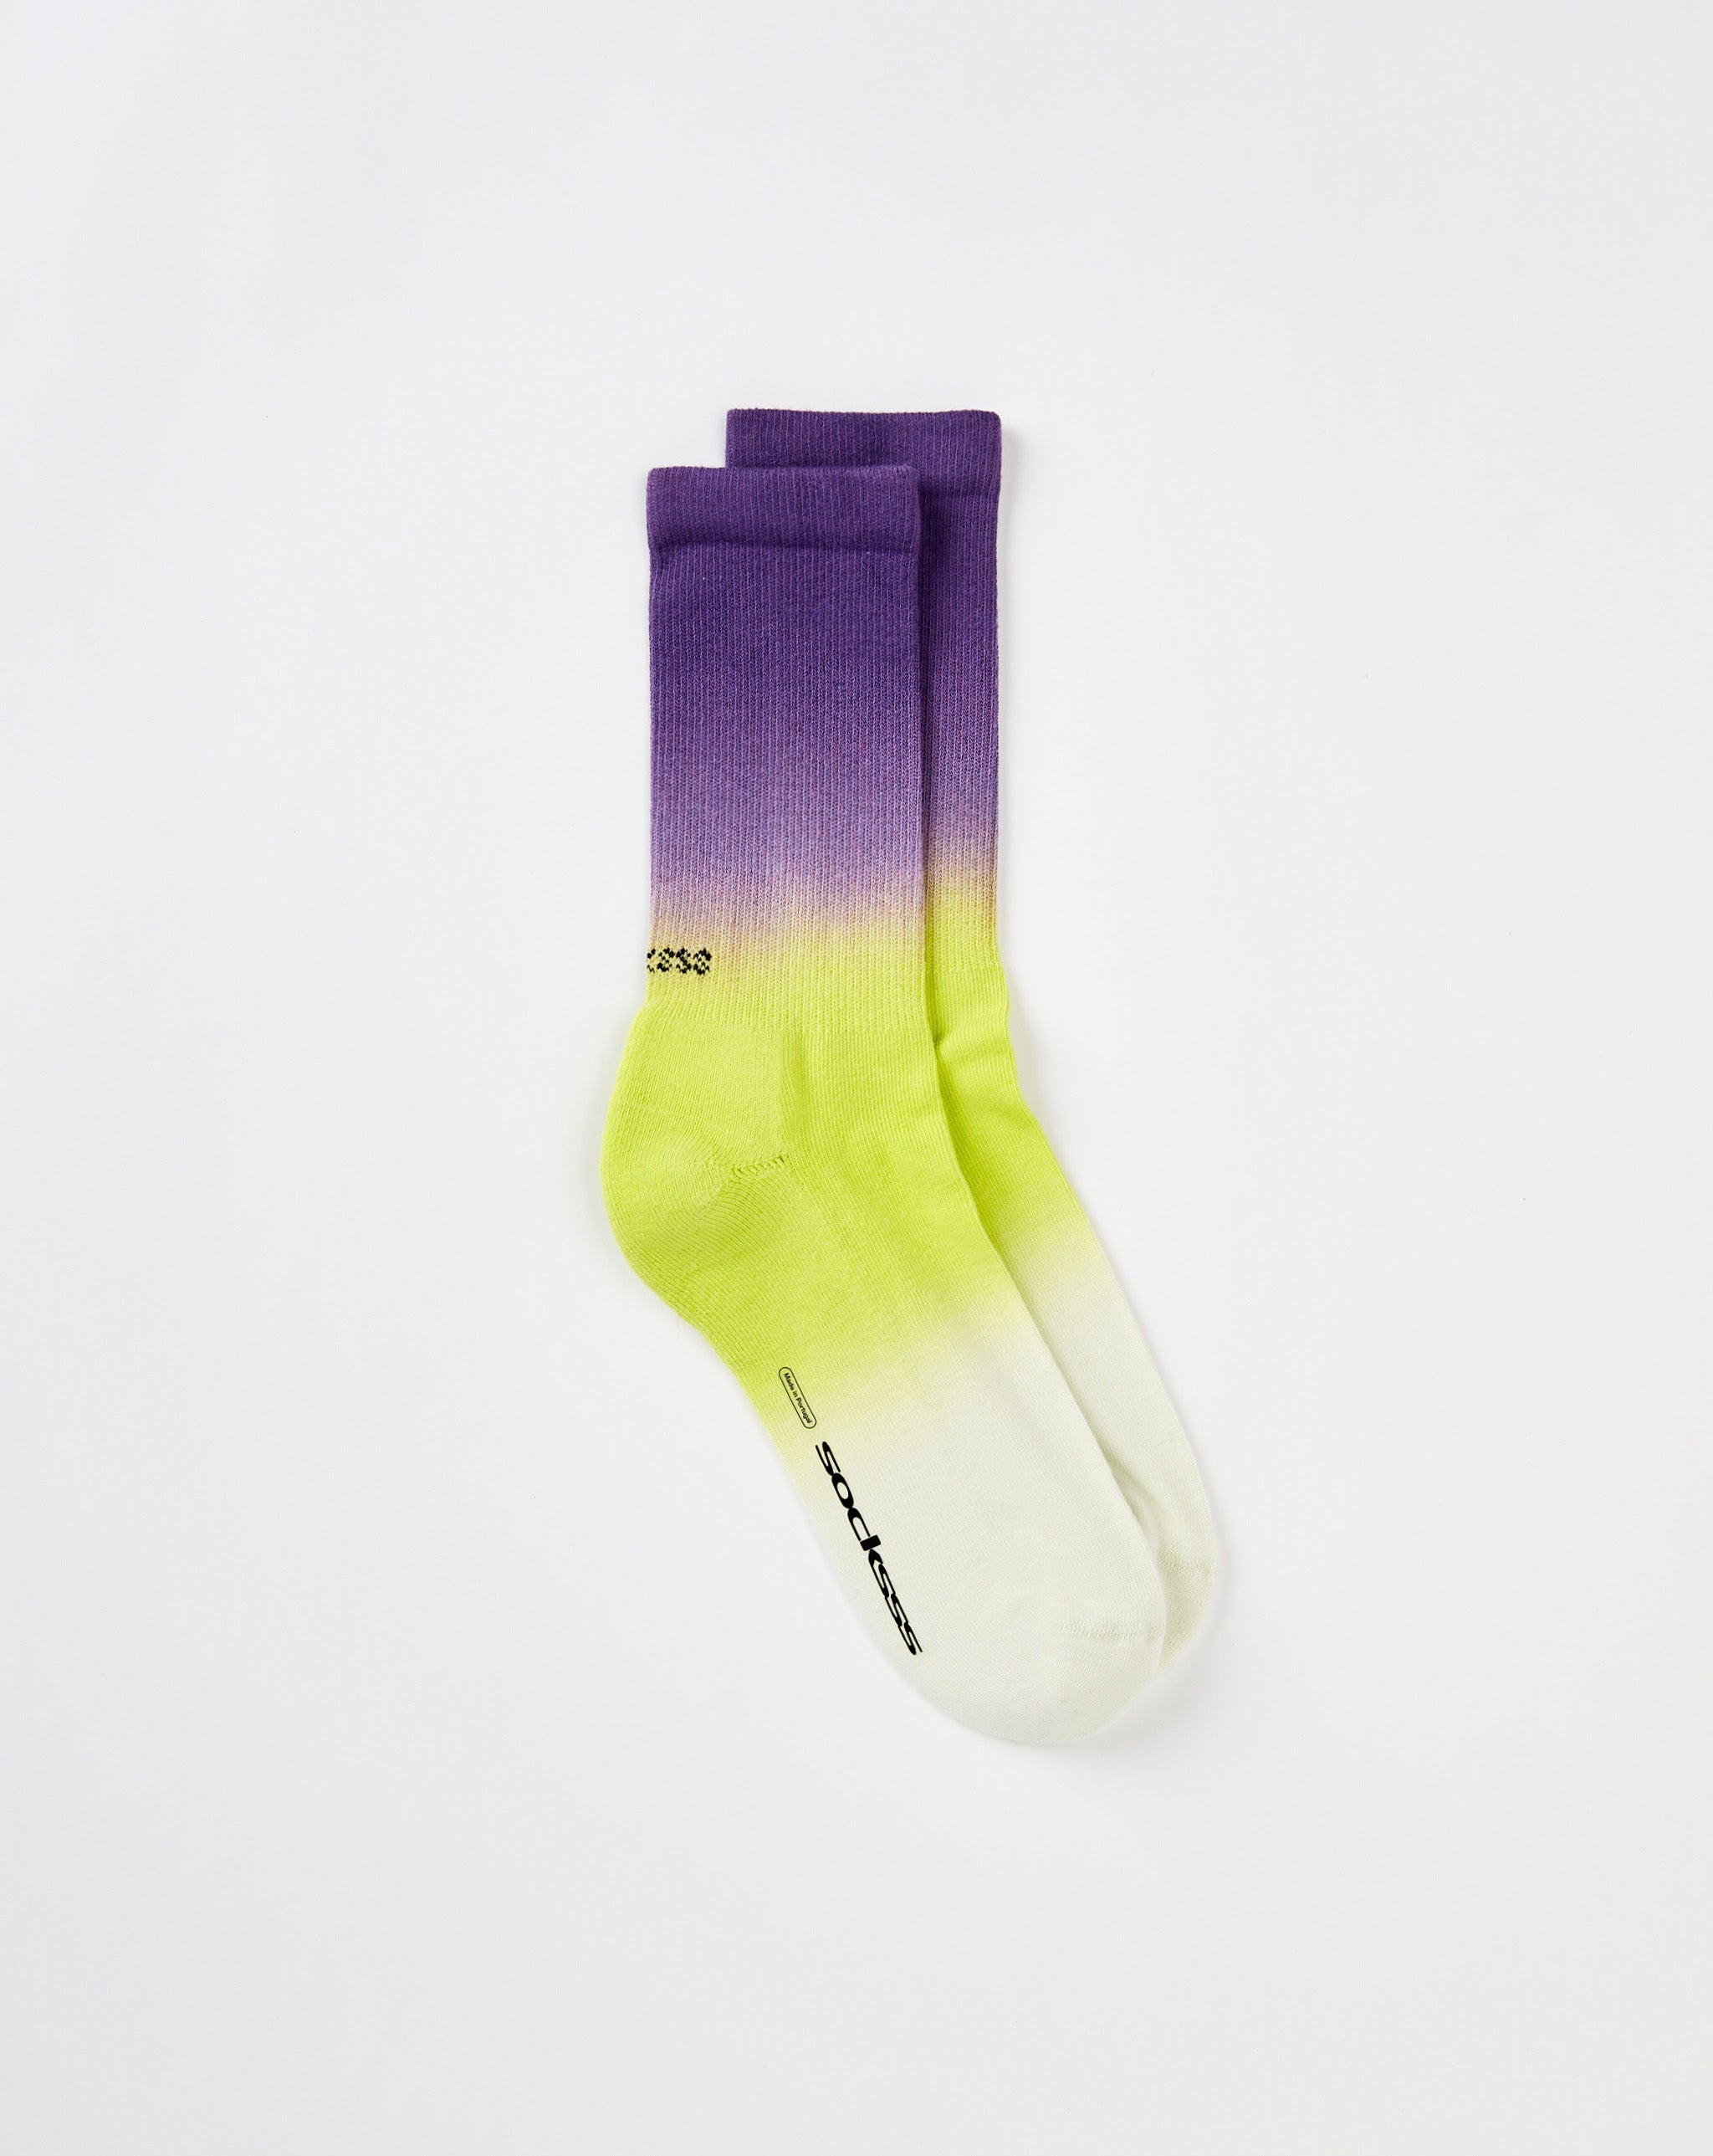 SOCKSSS Socksss Creative Socks for Every Mood  - Cheap Erlebniswelt-fliegenfischen Jordan outlet